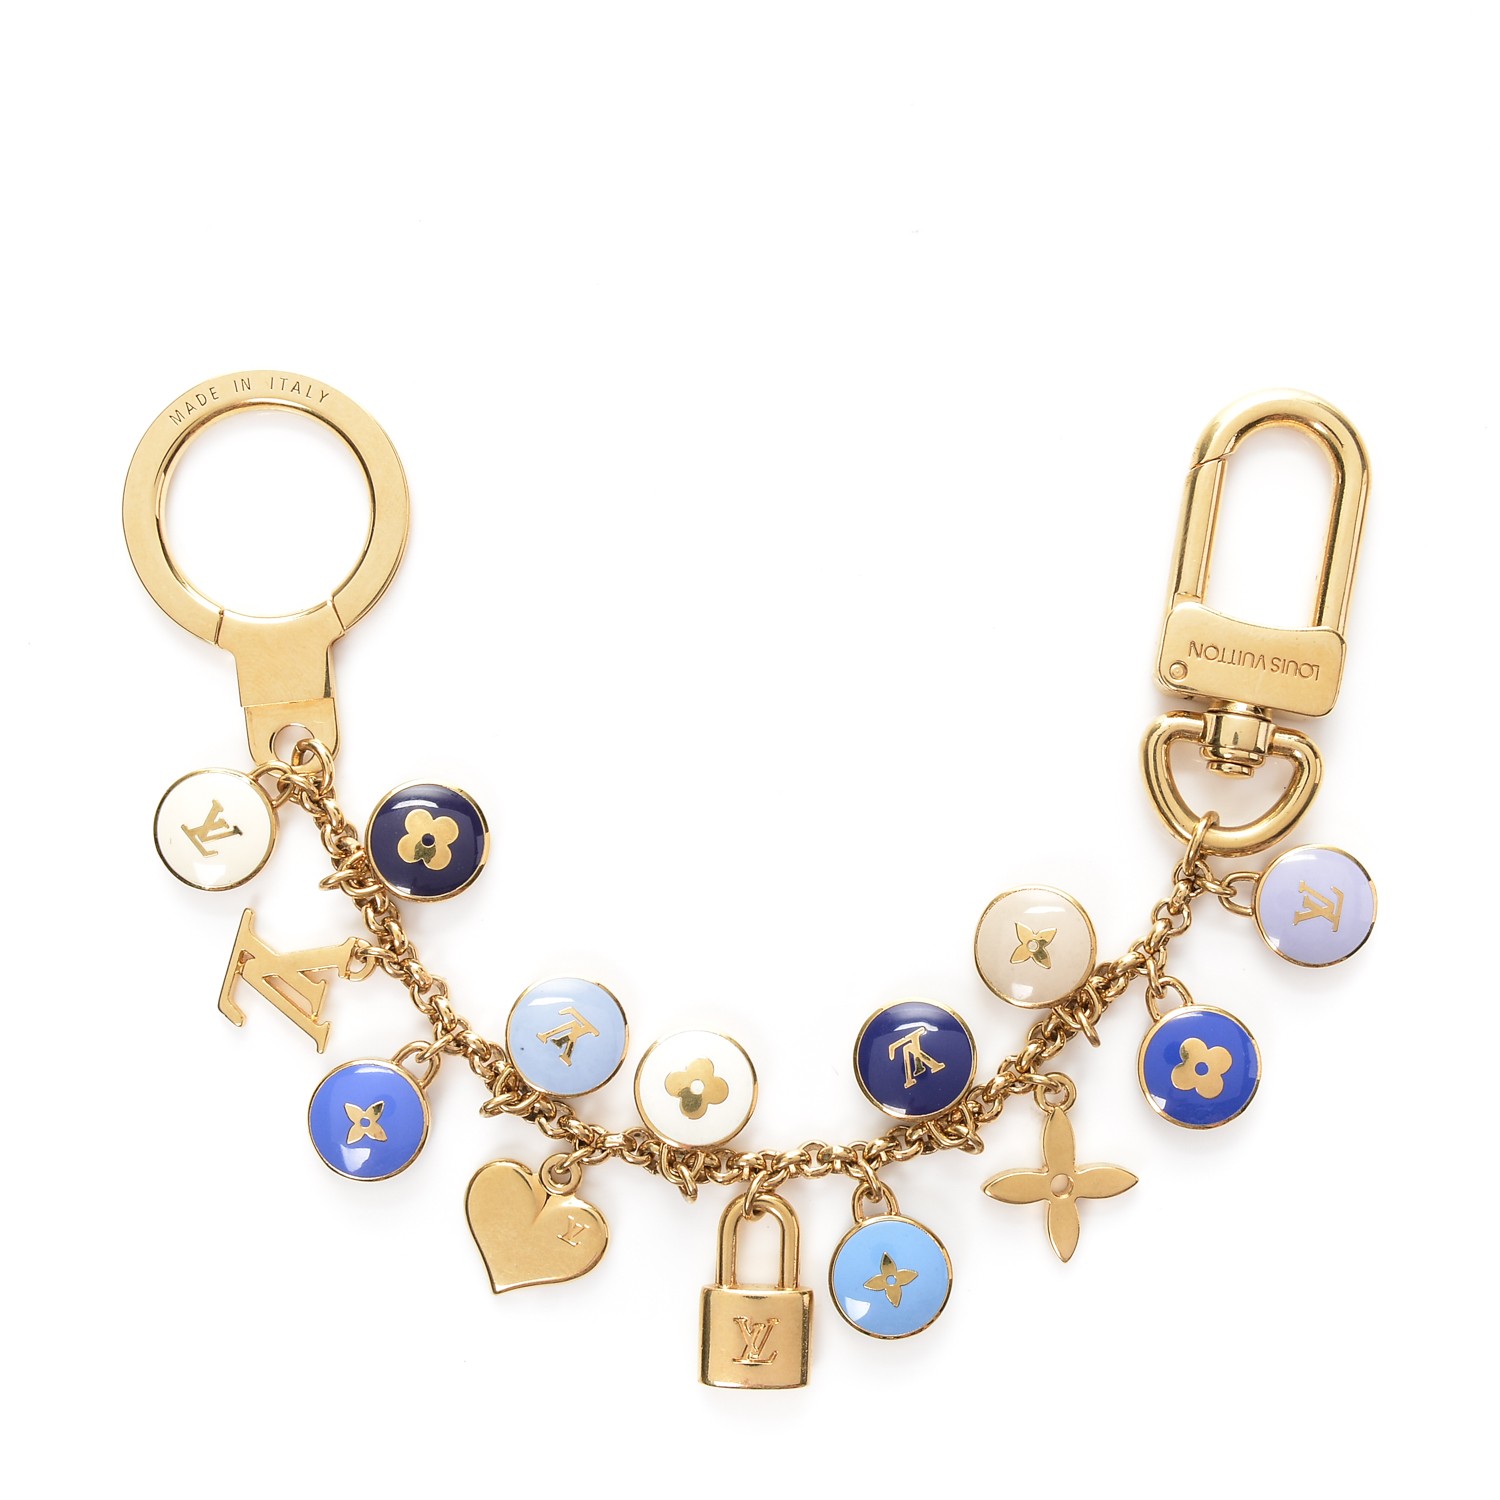 Louis Vuitton Metal Enamel Pastilles Key Chain Bag Charm